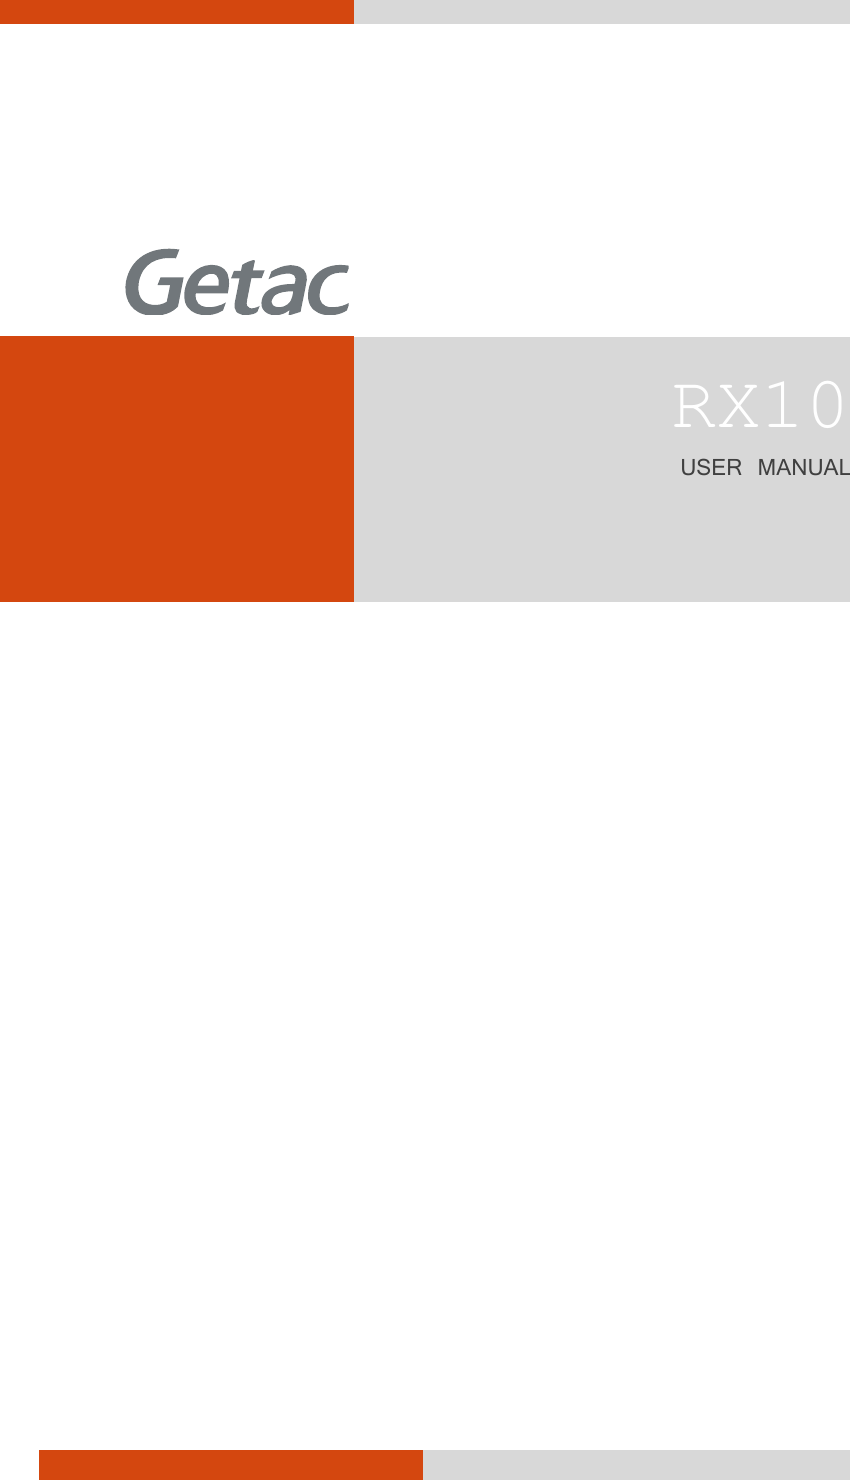                          RX10 USER MANUAL 